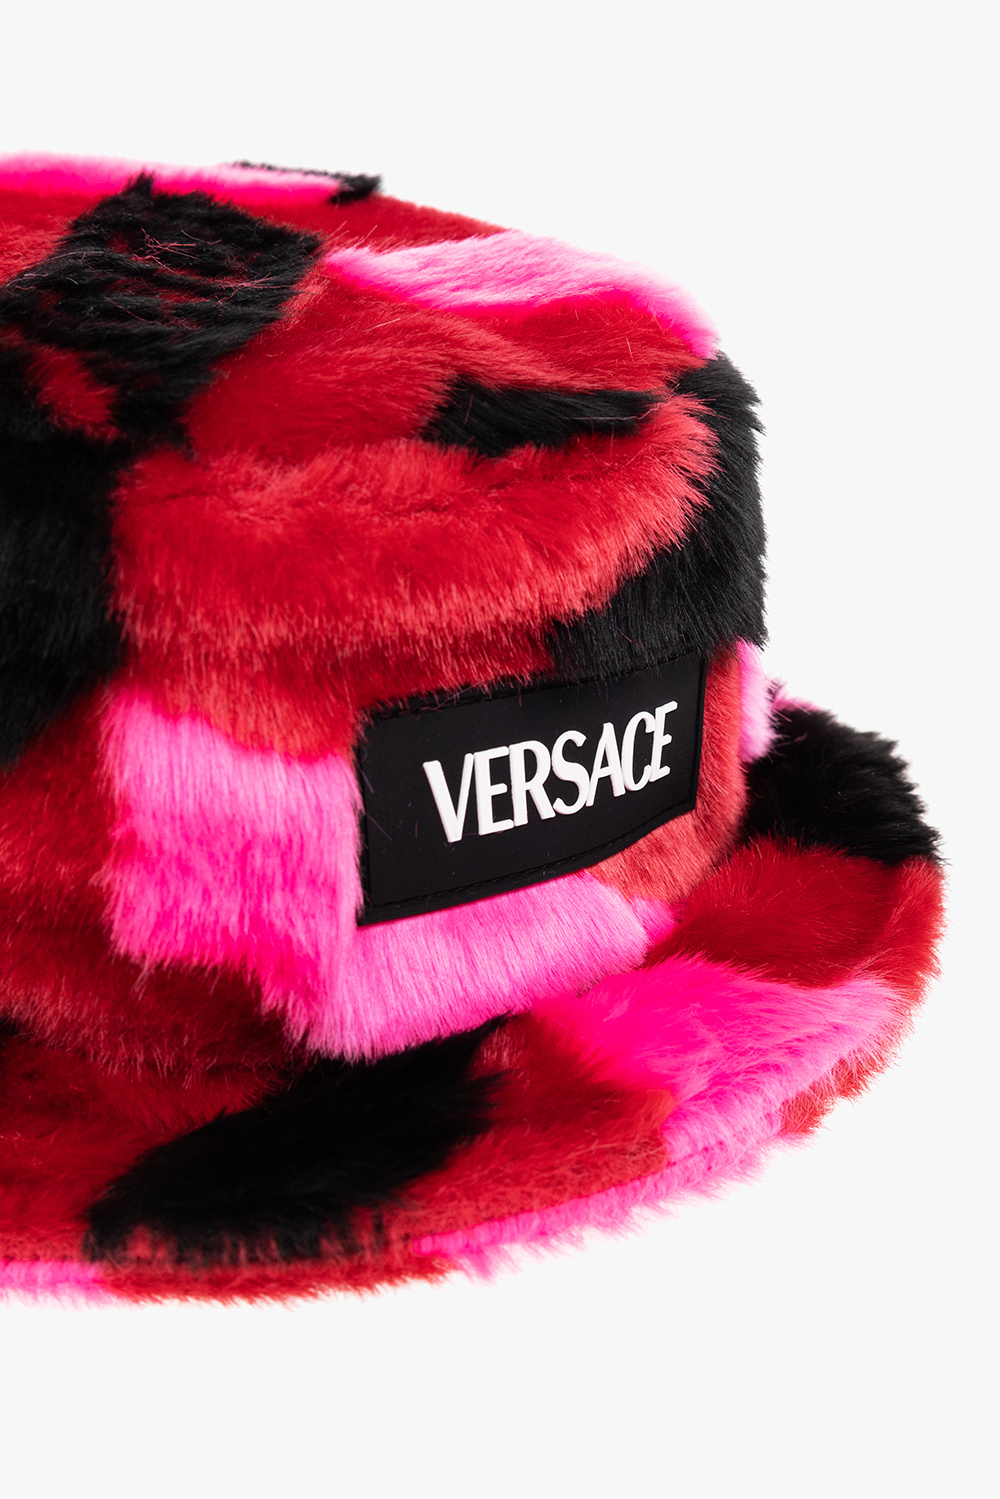 Versace Kids clothing women footwear-accessories accessories caps